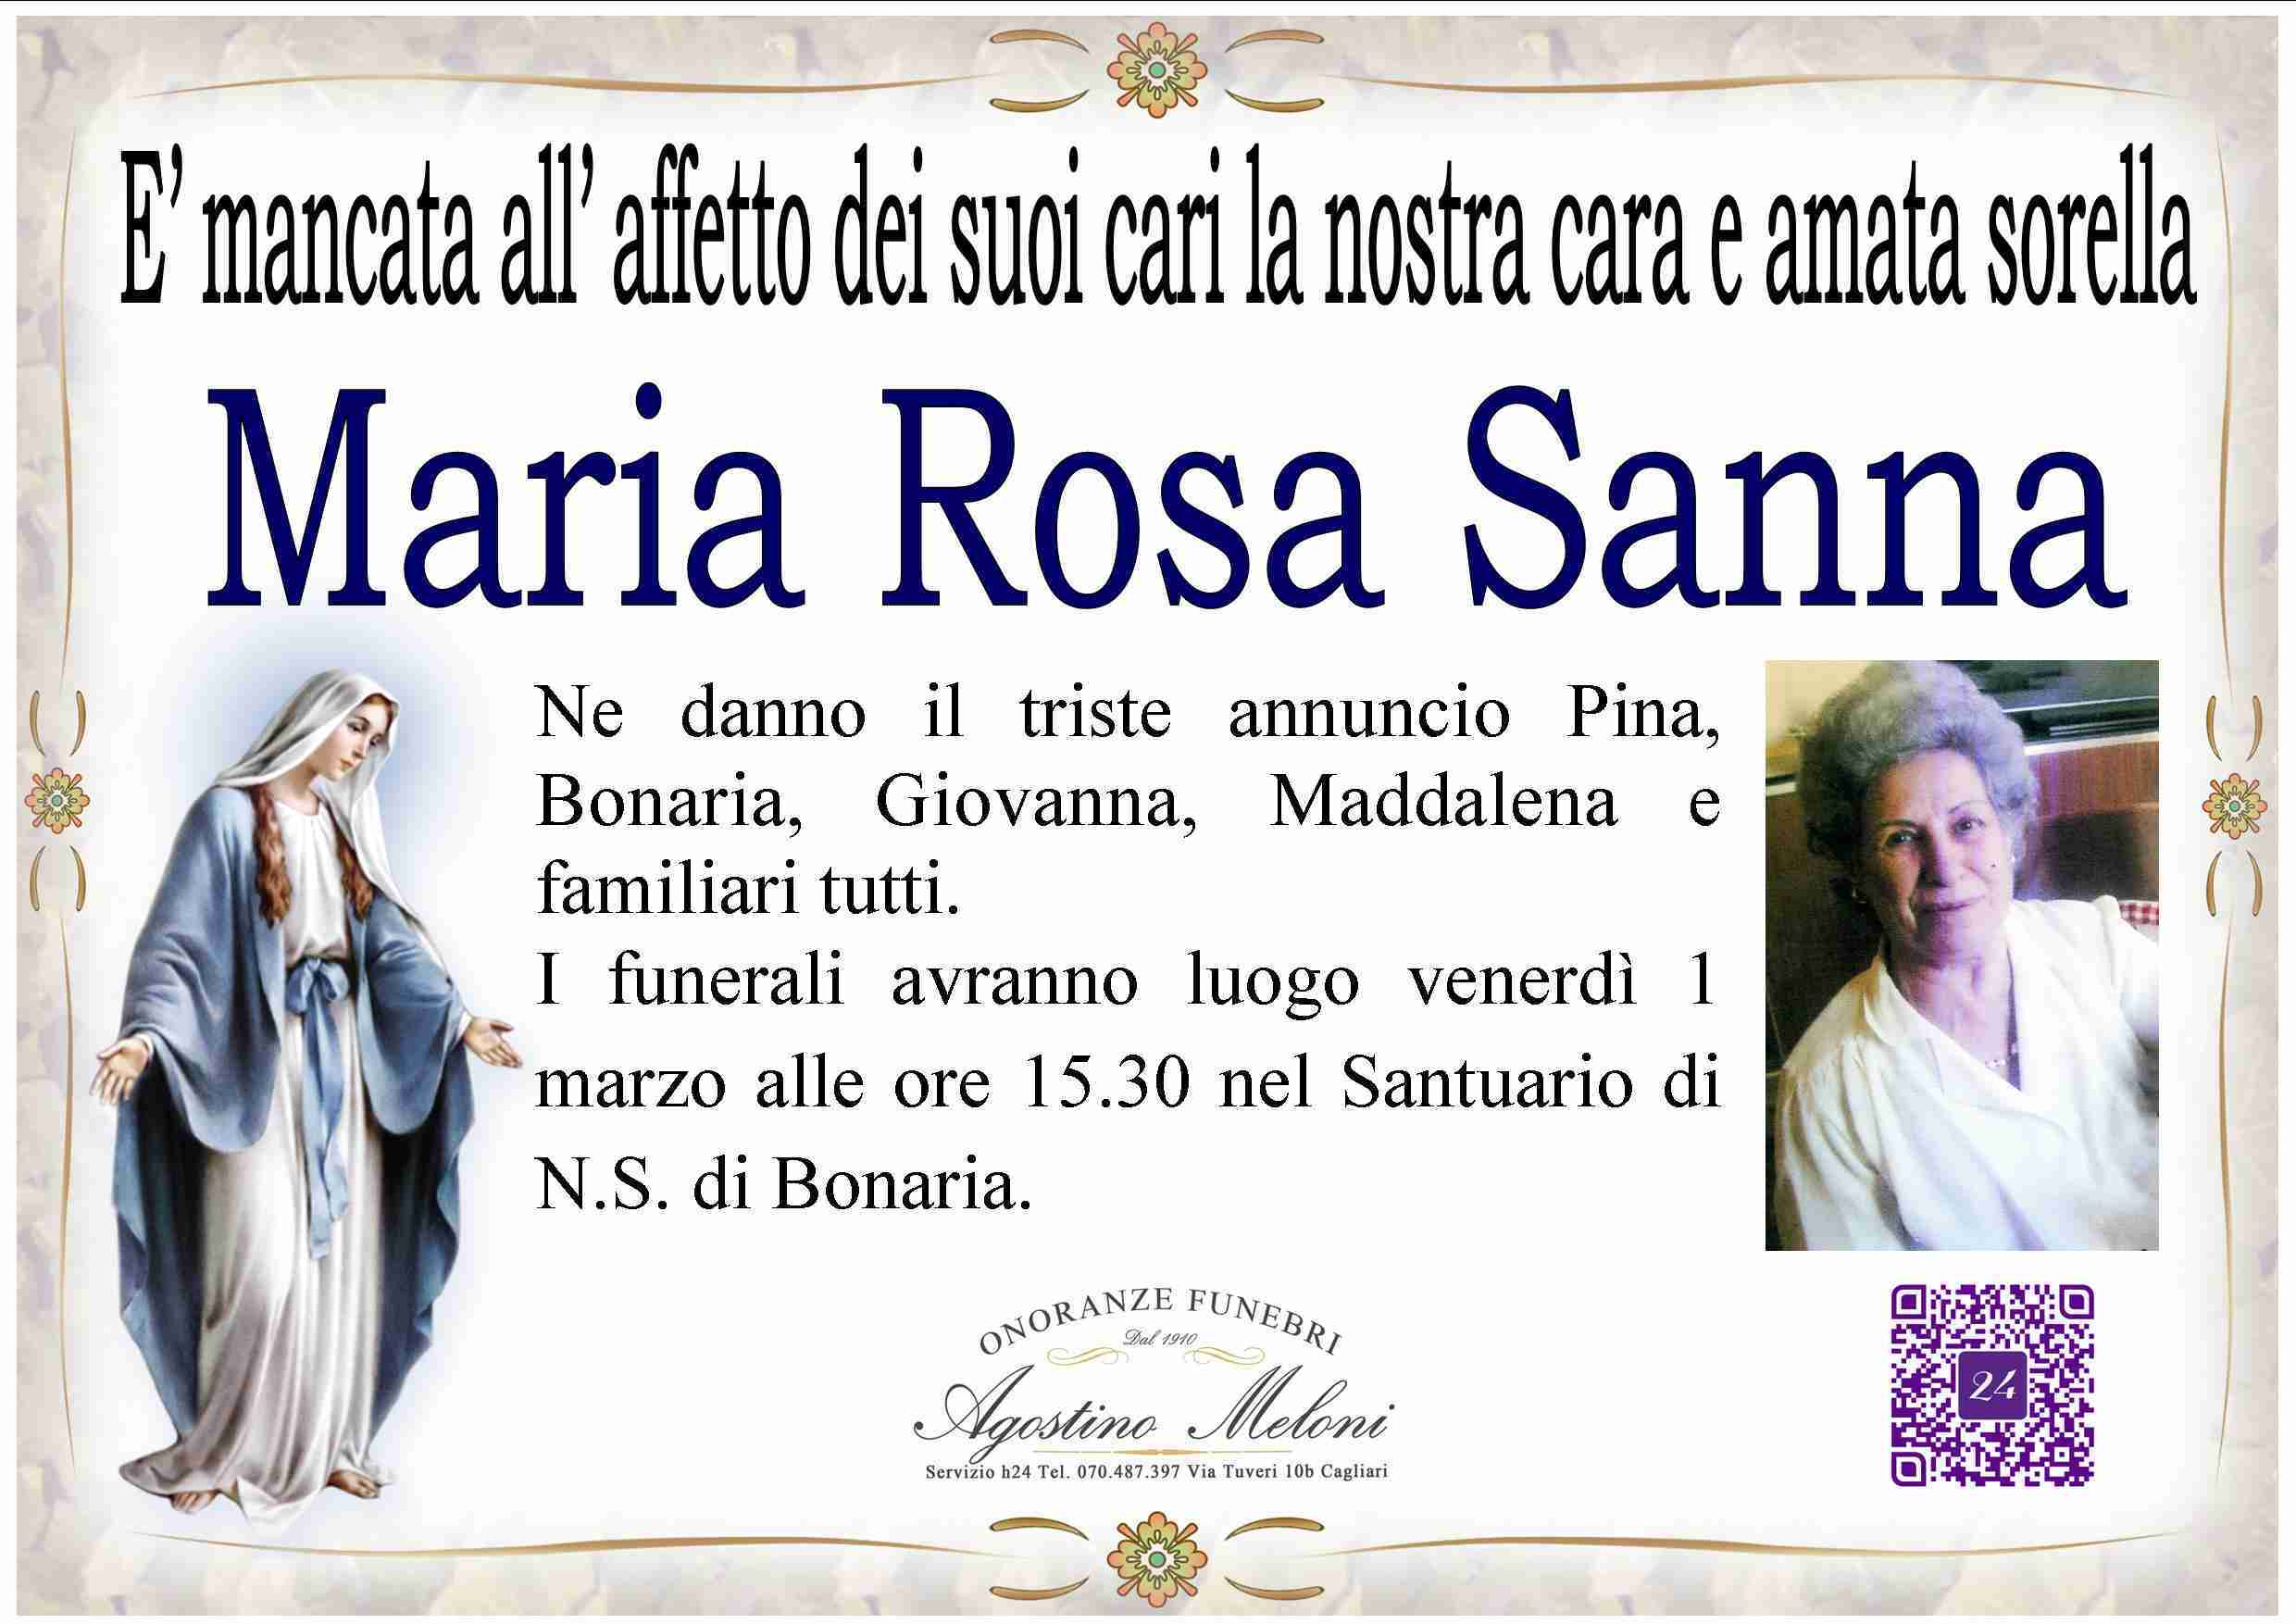 Maria Rosa Sanna